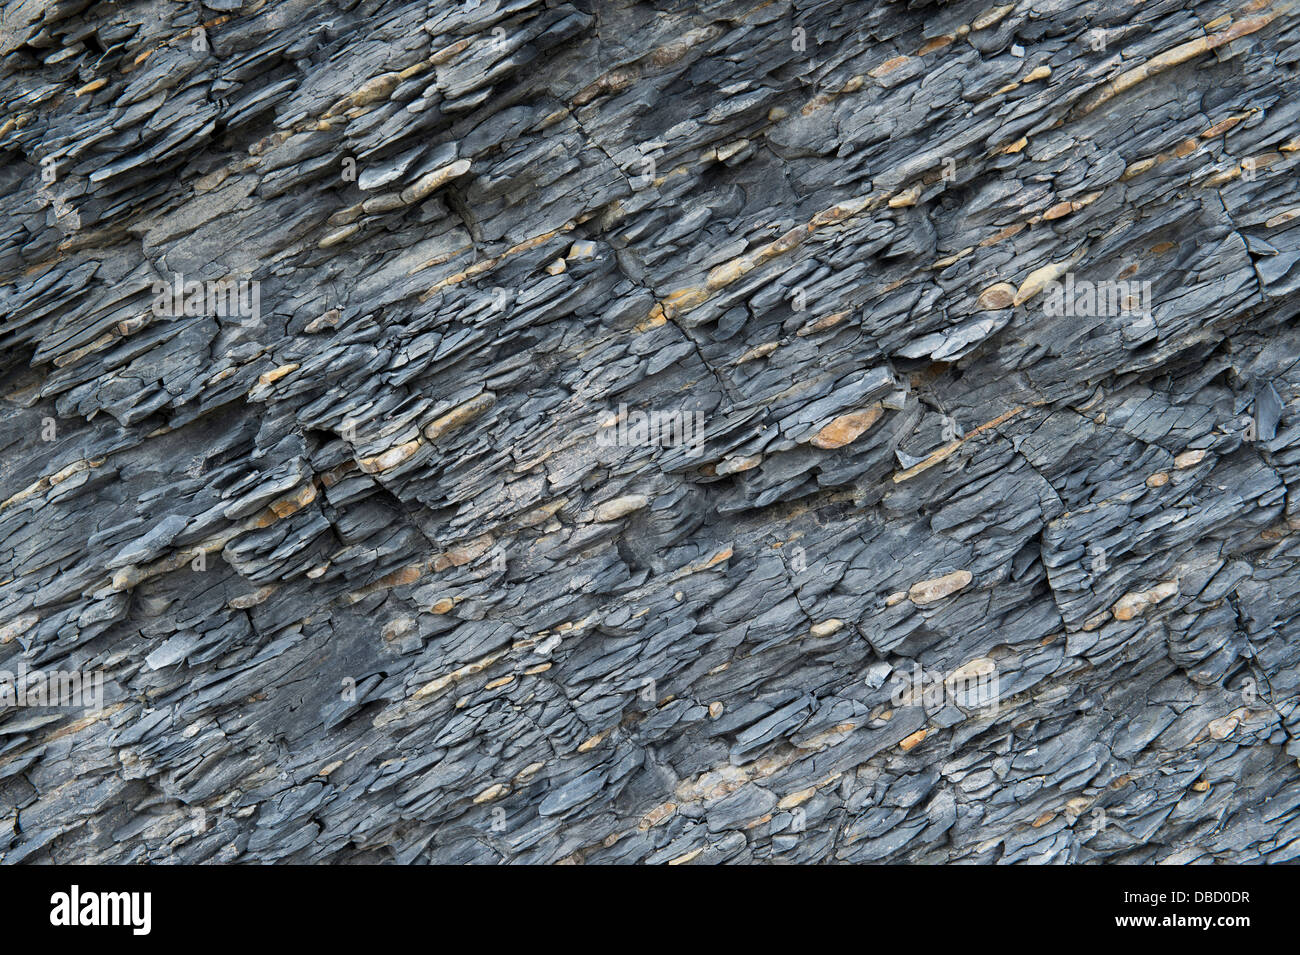 Shale rock. Northumberland Coastline, Englandgeological Stock Photo